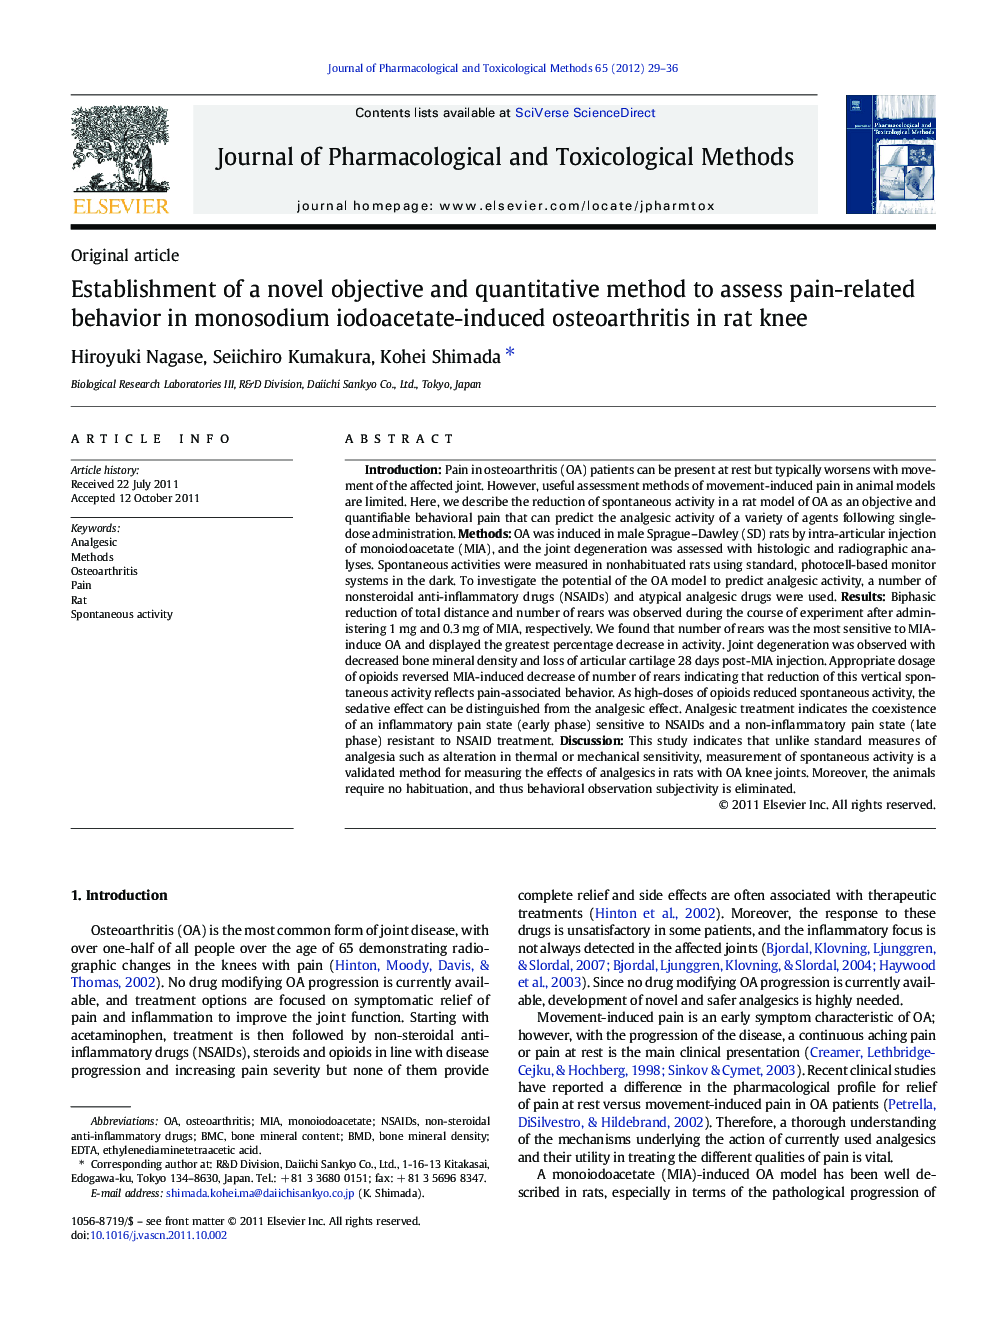 Establishment of a novel objective and quantitative method to assess pain-related behavior in monosodium iodoacetate-induced osteoarthritis in rat knee